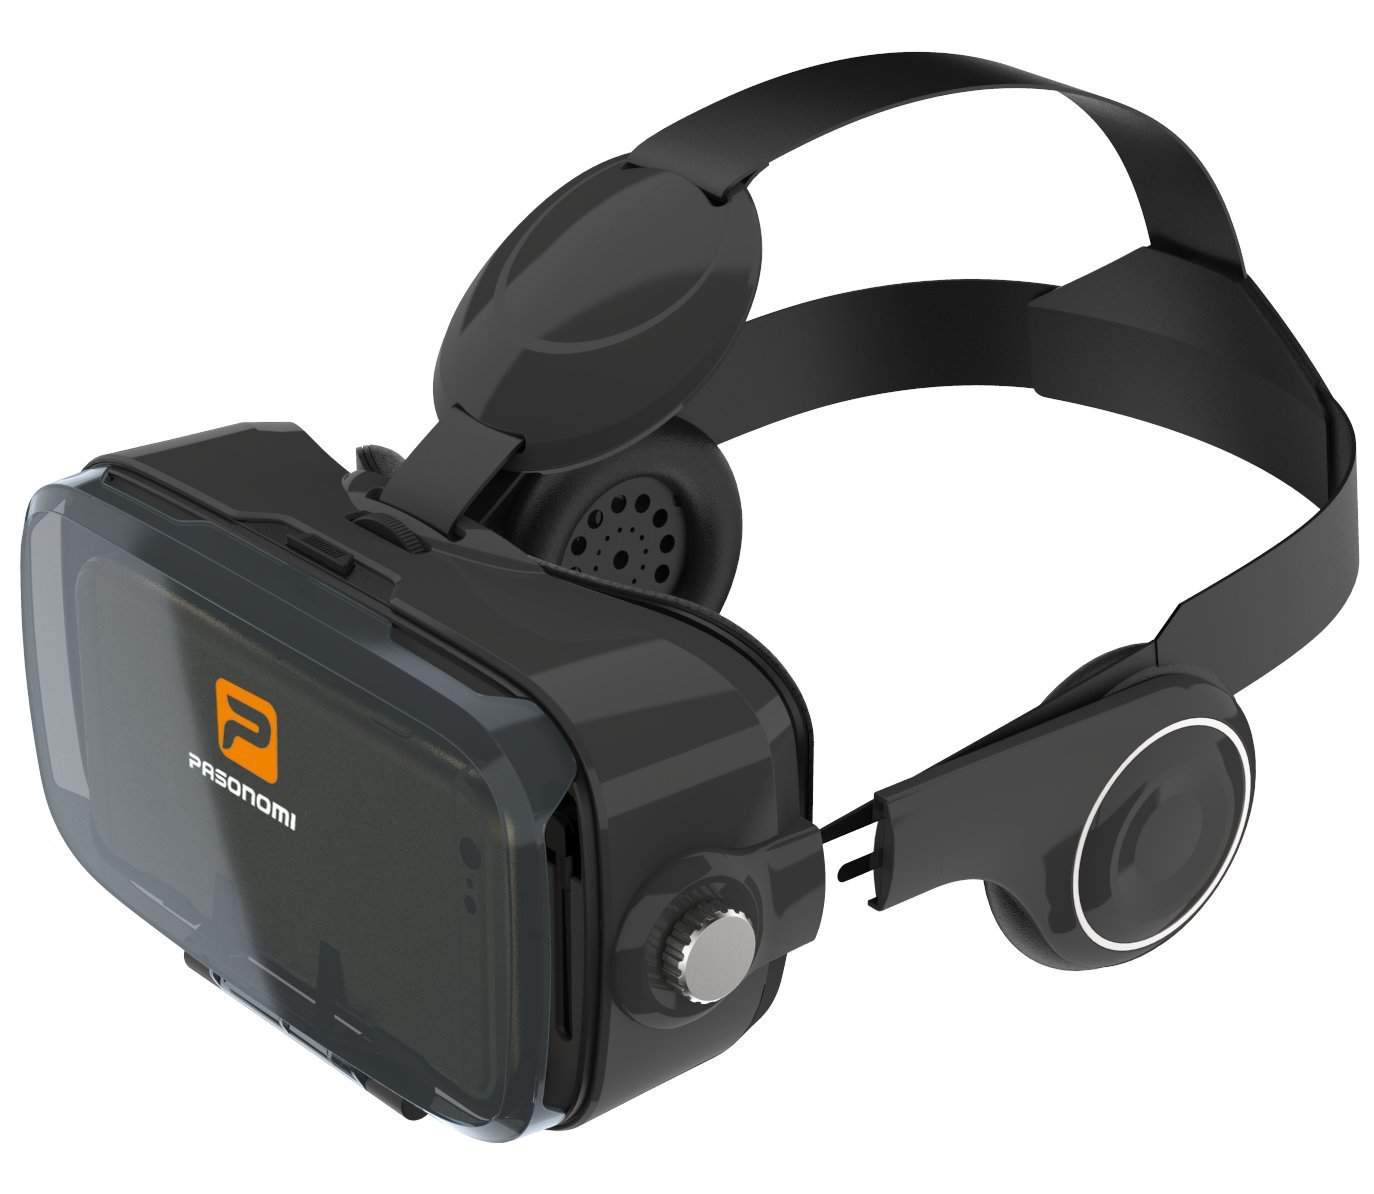 Pasonomi VR XMAS Virtual Reality Headset with Stereo Headphone Speaker